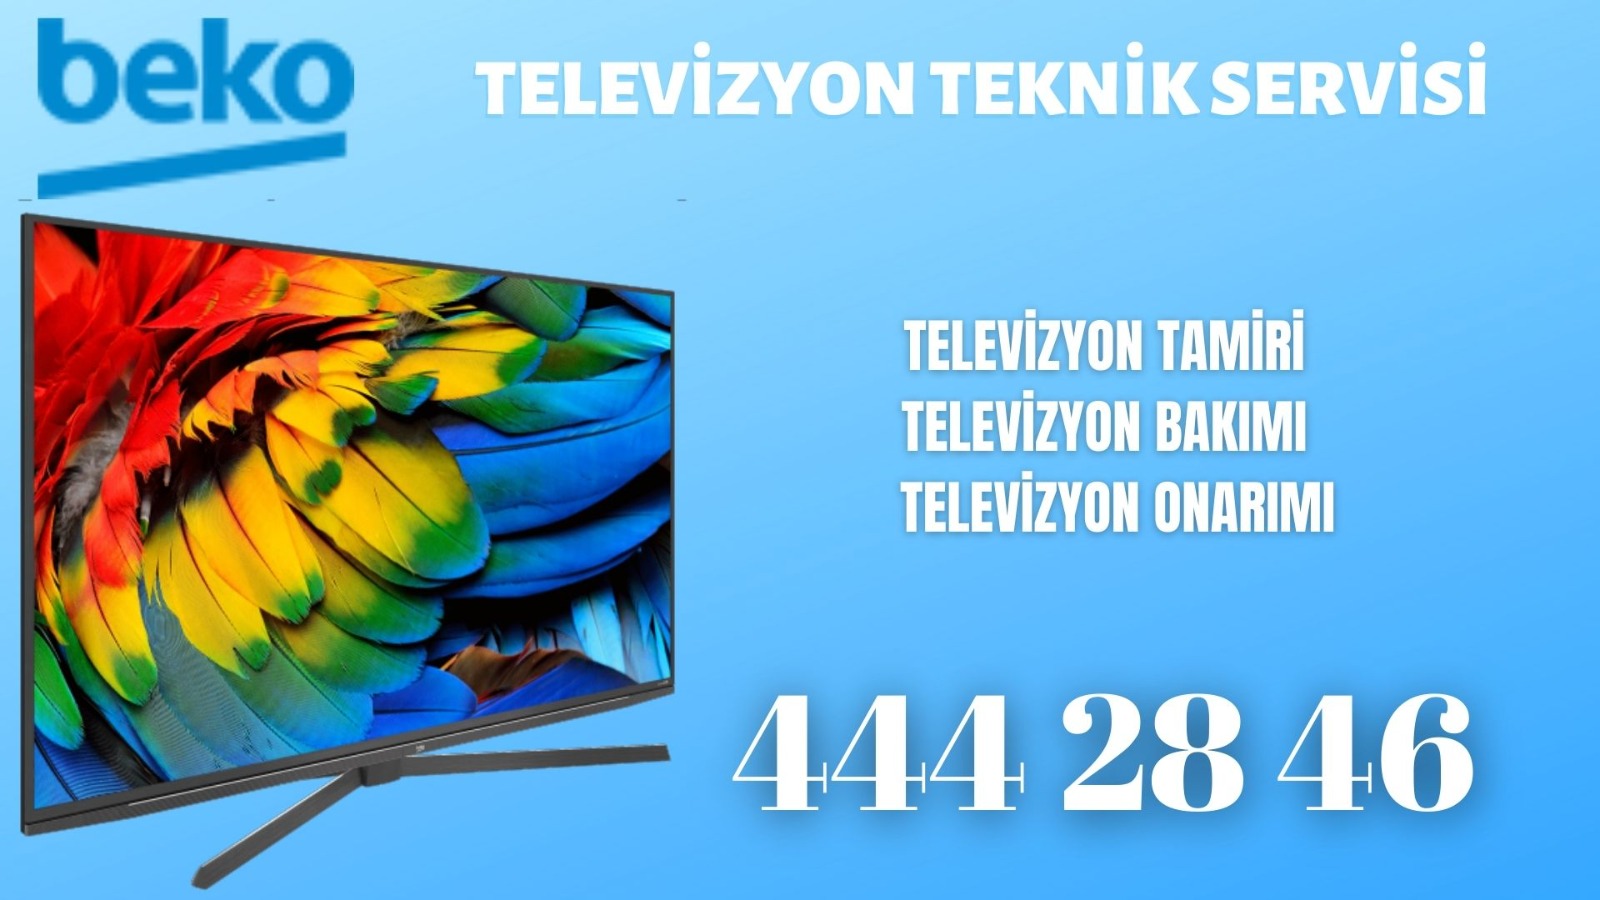 Antalya Beko Televizyon Servisi 